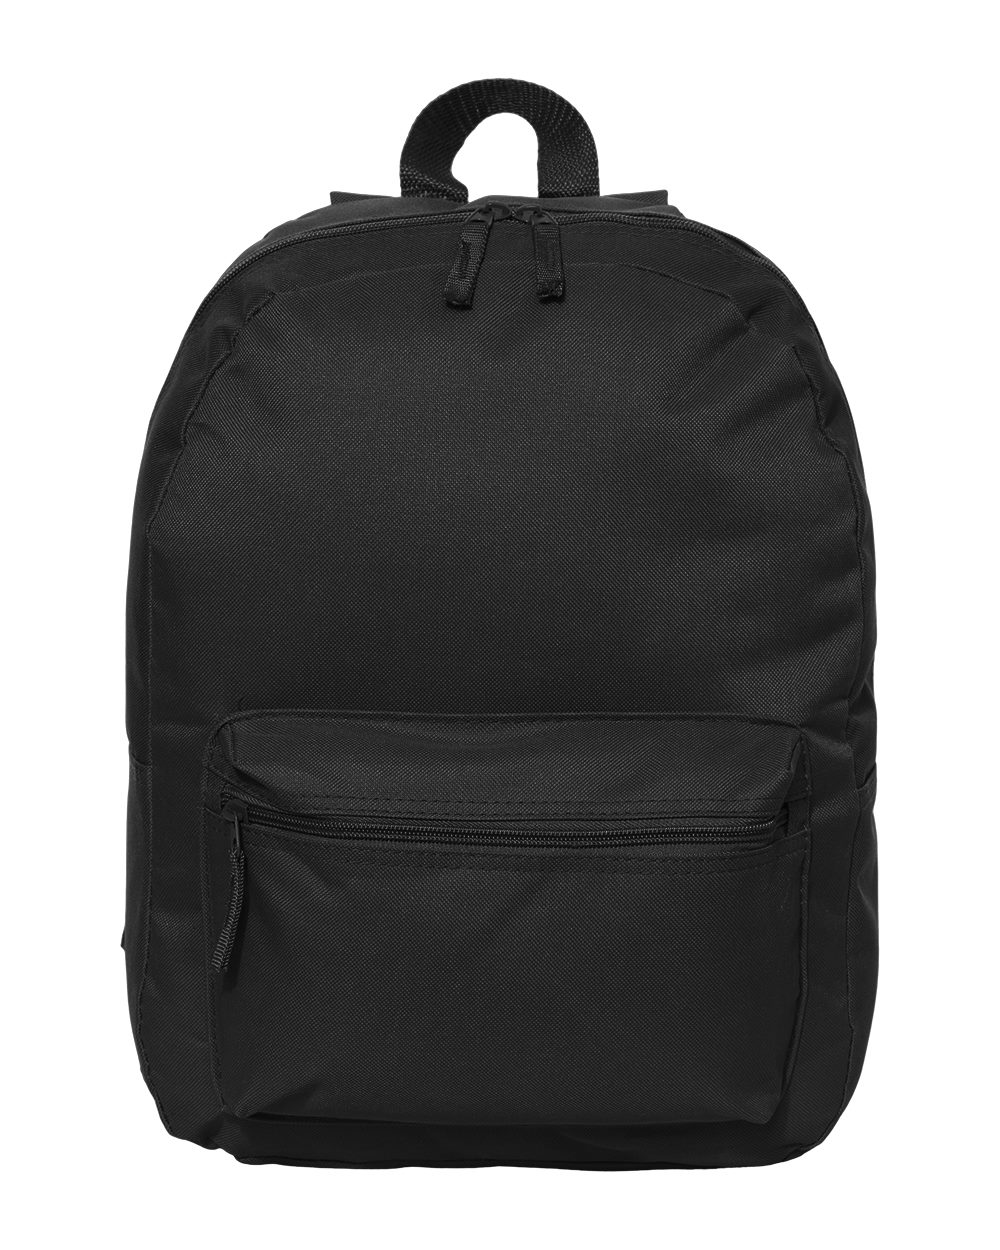 Liberty Bags 16" Basic Backpack - image 2 of 3